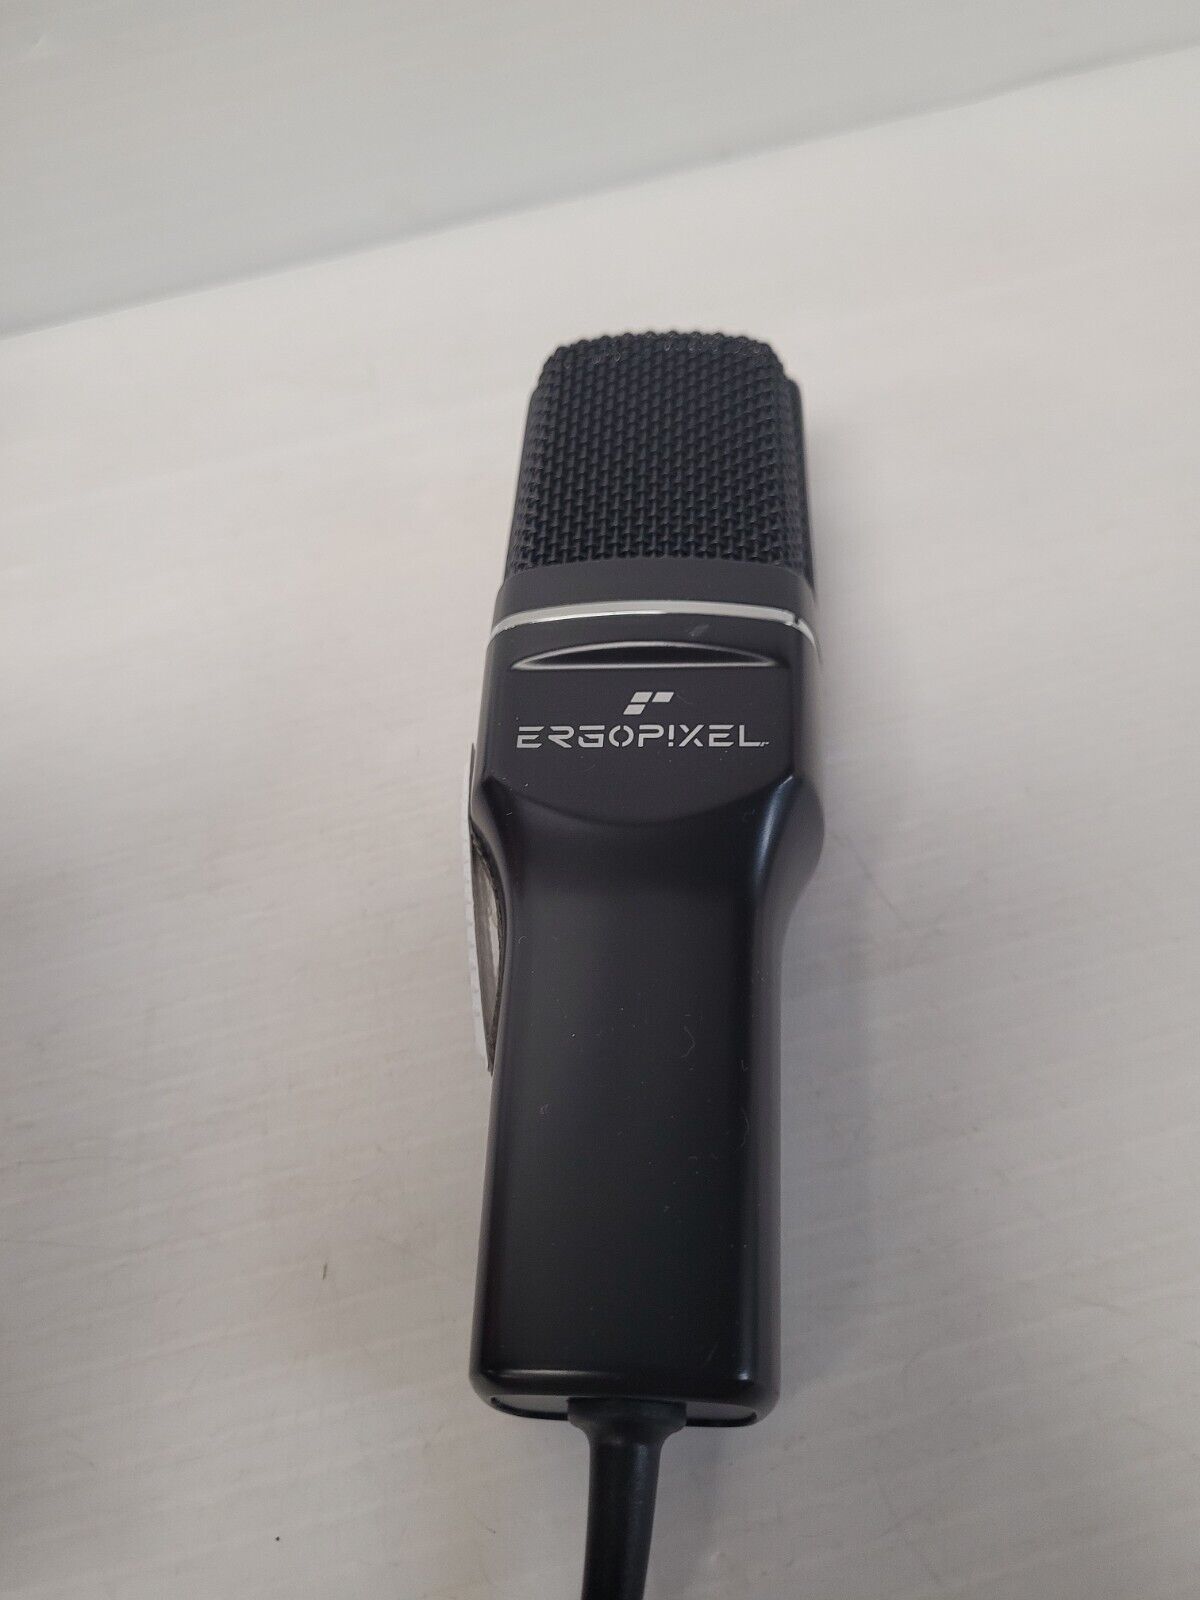 (N77723-2) Ergopixel FP-mp0002 Microphone